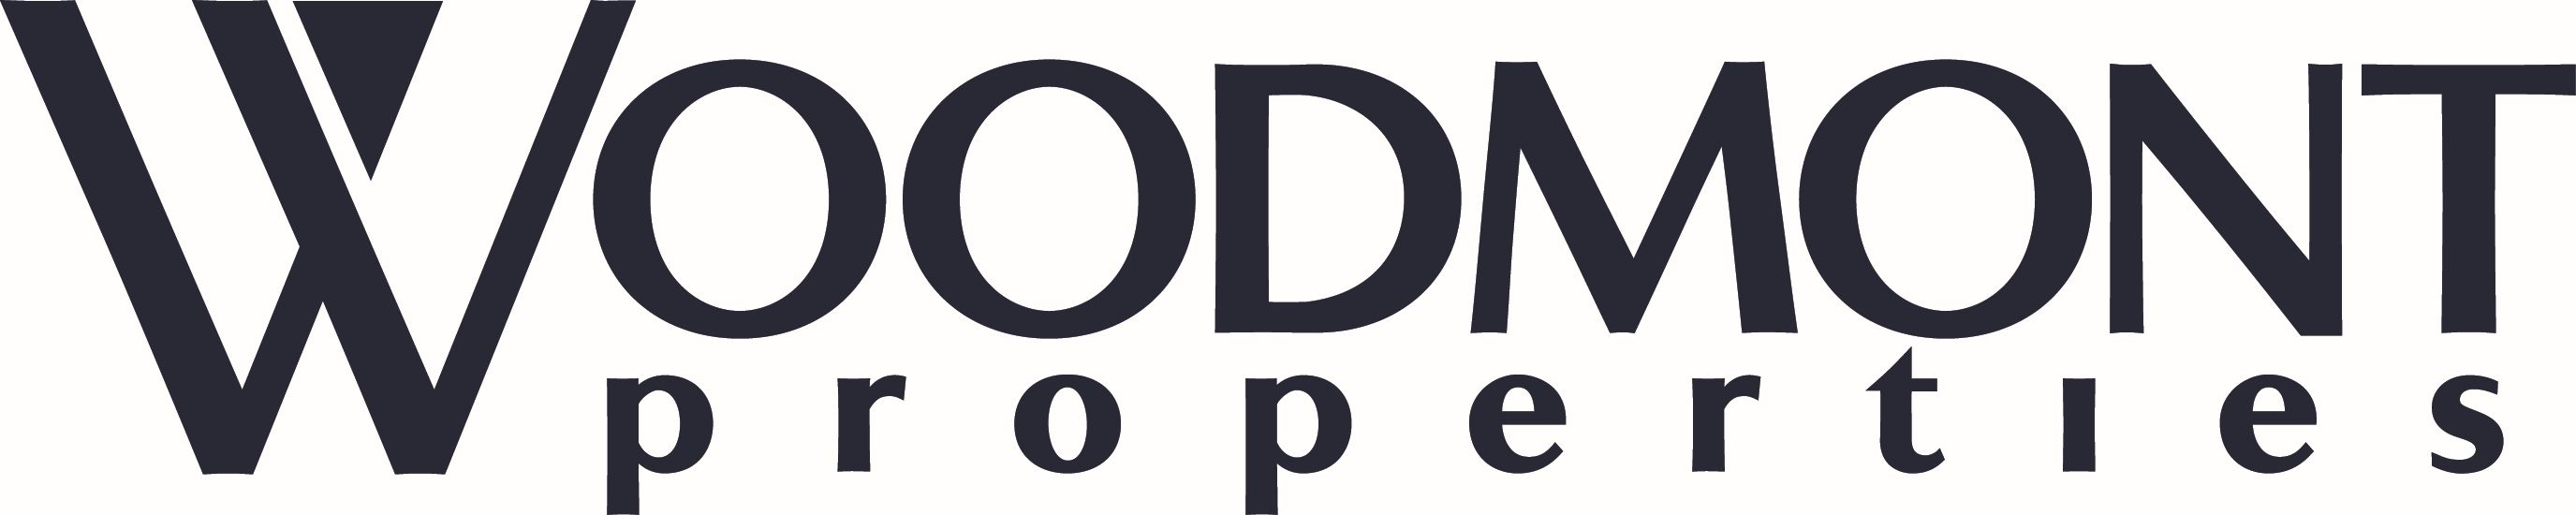 Woodmont Properties Company Logo